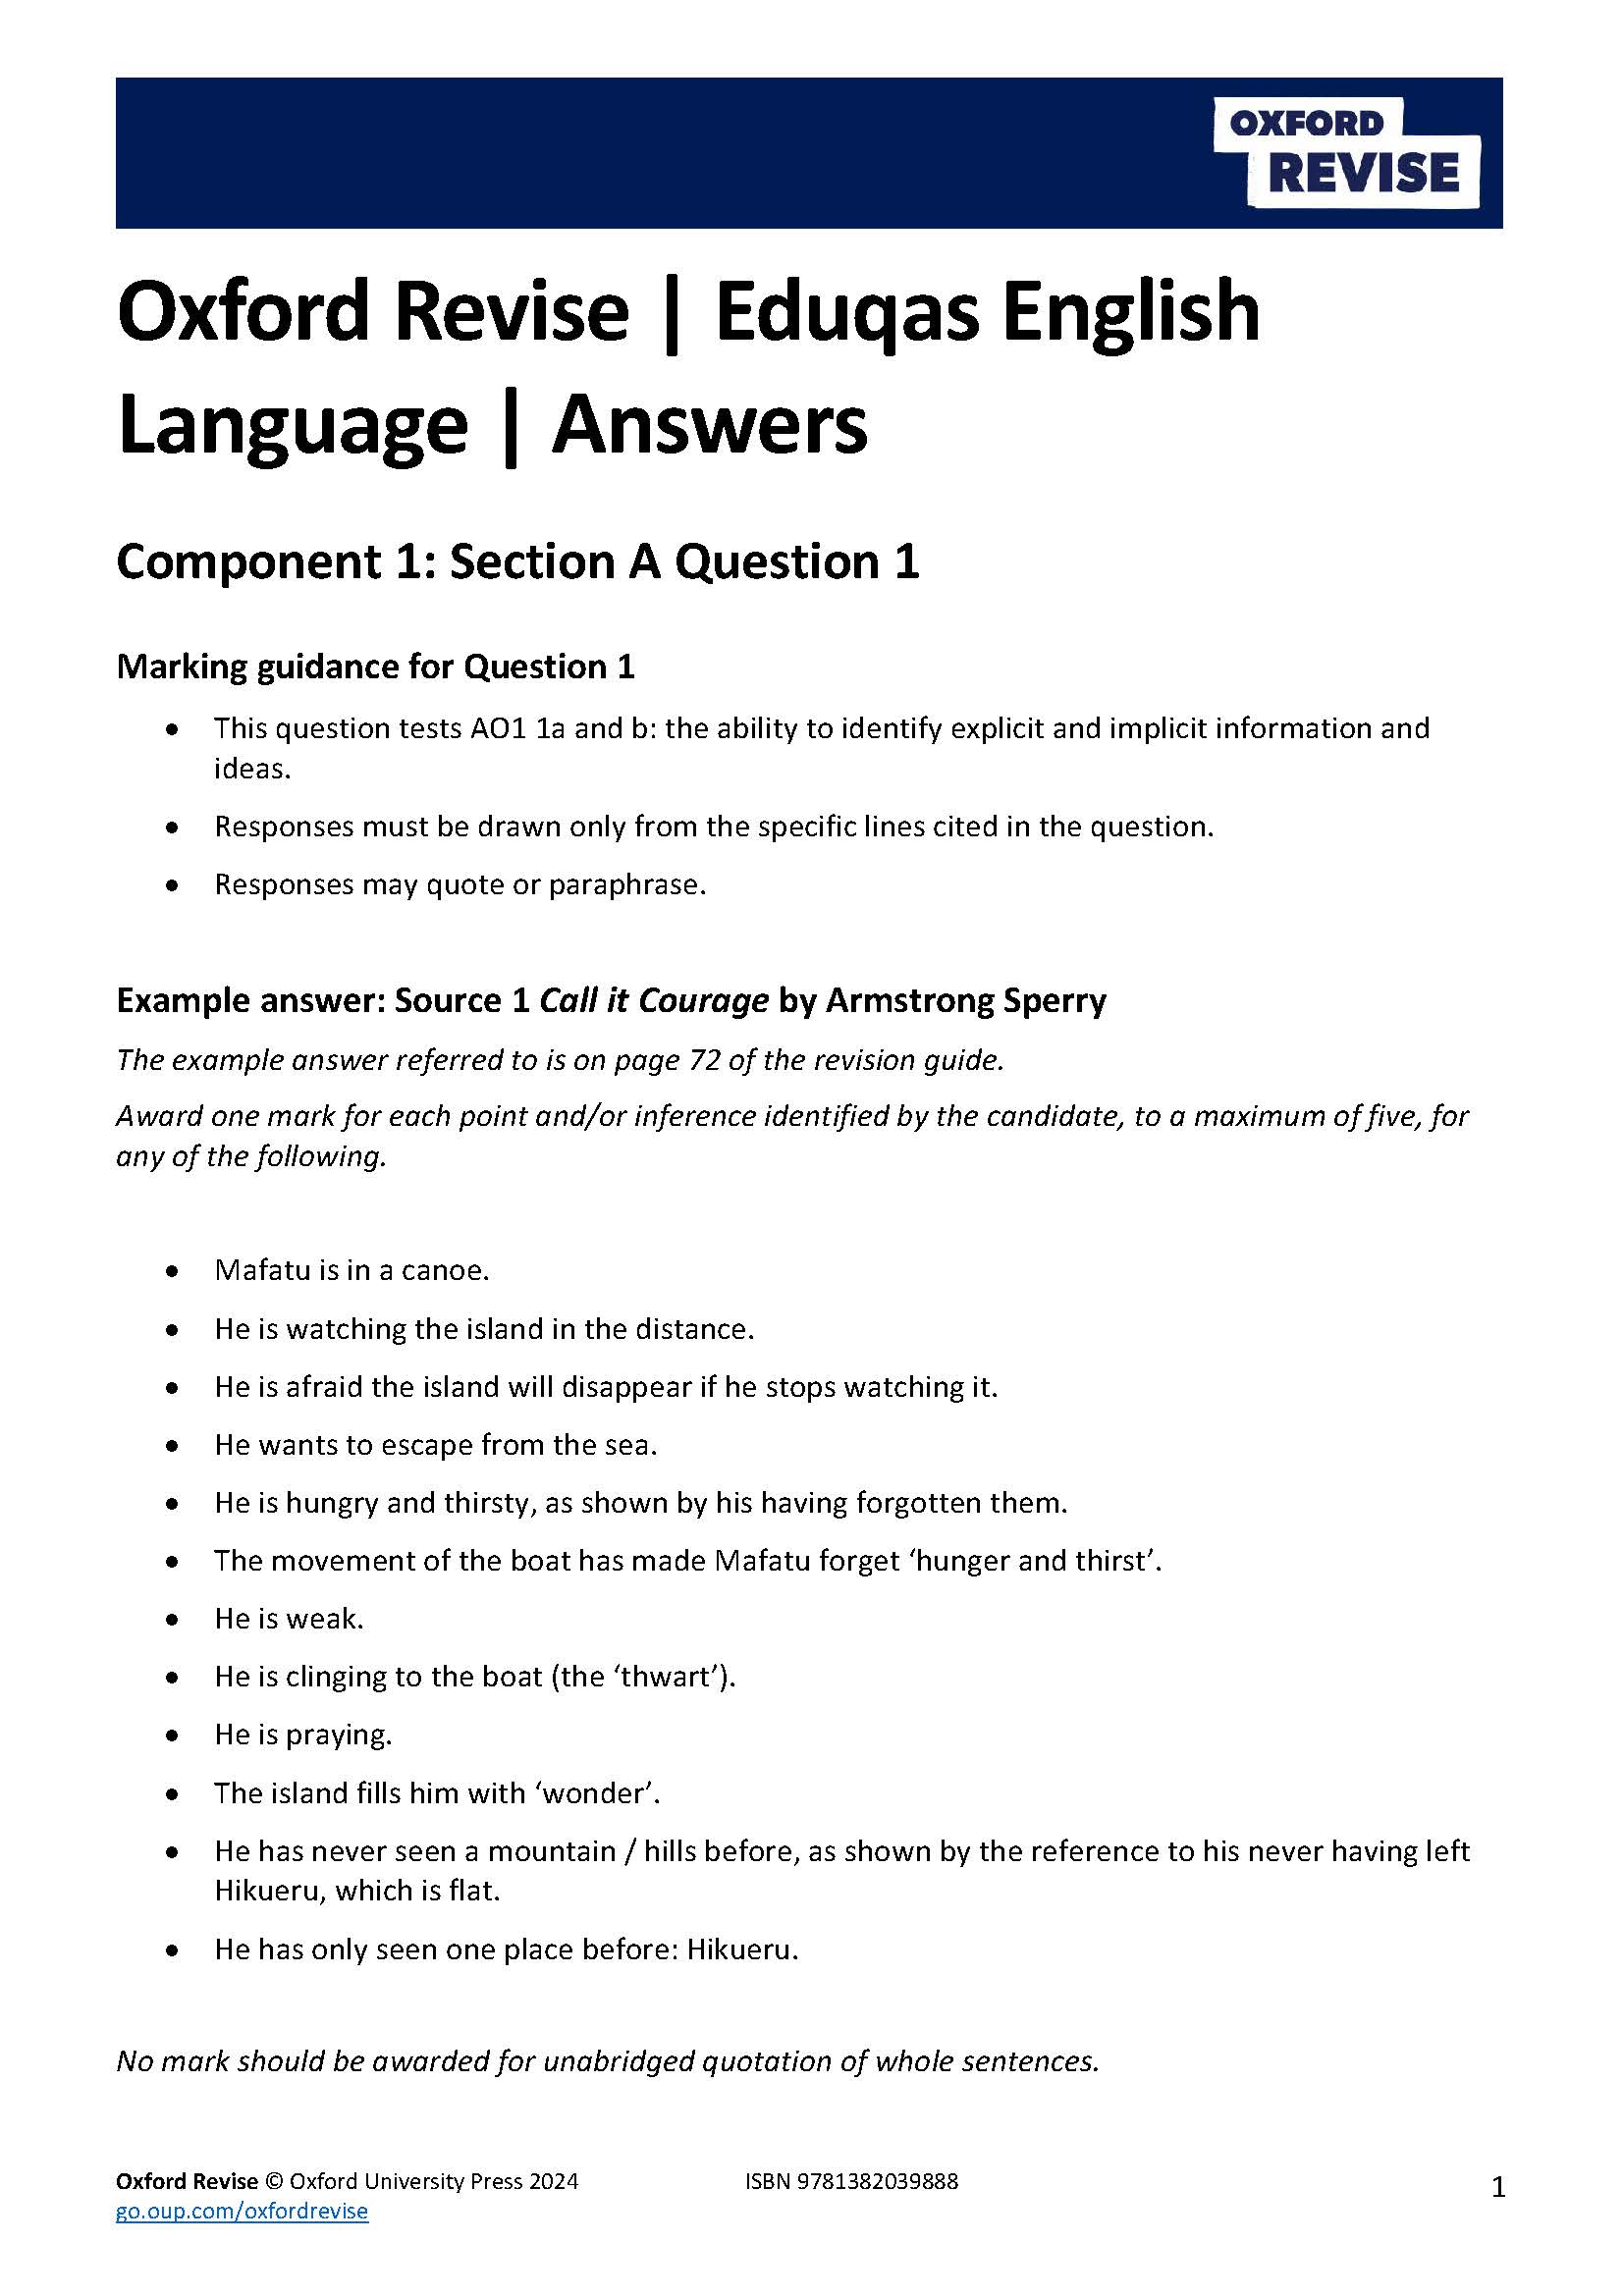 Oxford Revise Eduqas GCSE English Language Component 1 Answers